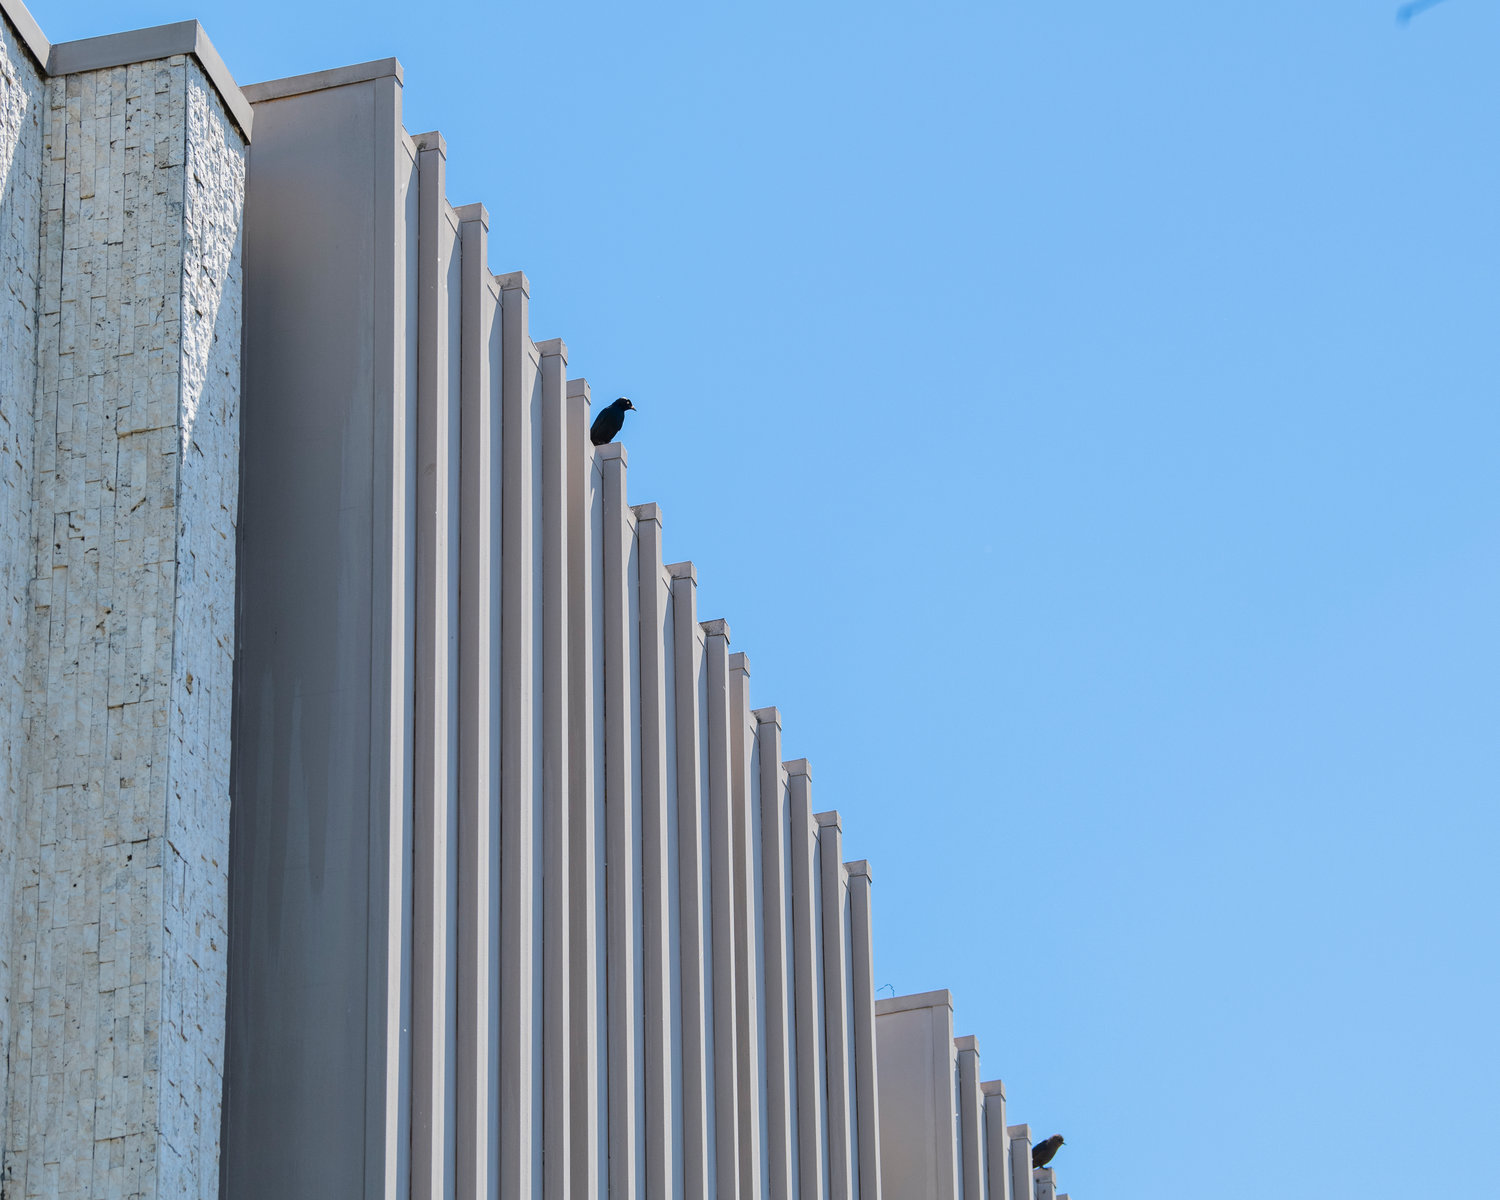 A couple of Brewer’s blackbirds sit atop Chehalis City Hall Thursday, June 23, 2022.